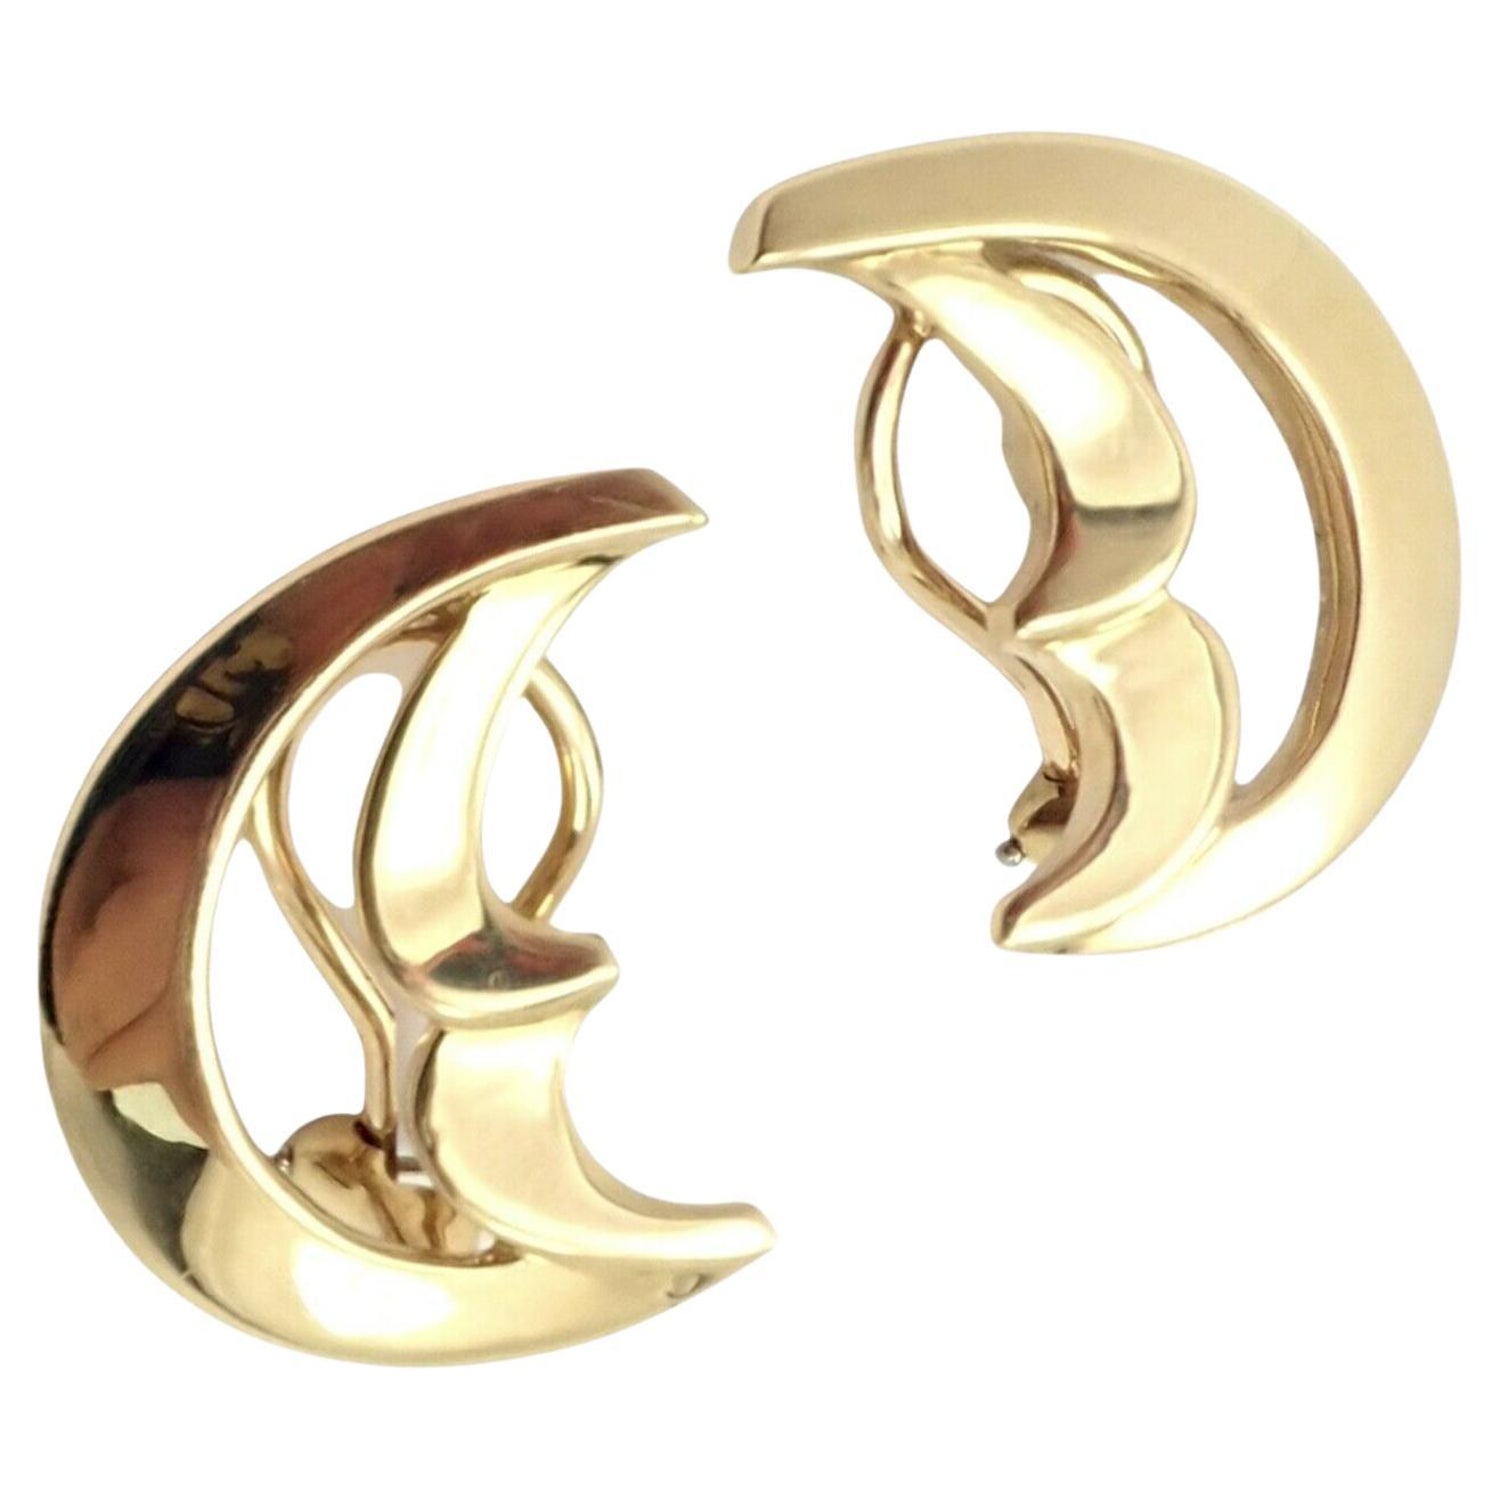 ERT 14K Gold Earring Backs - 12 Piece Replacement Earring Backs for Stud  Ear Rings 6 Pairs